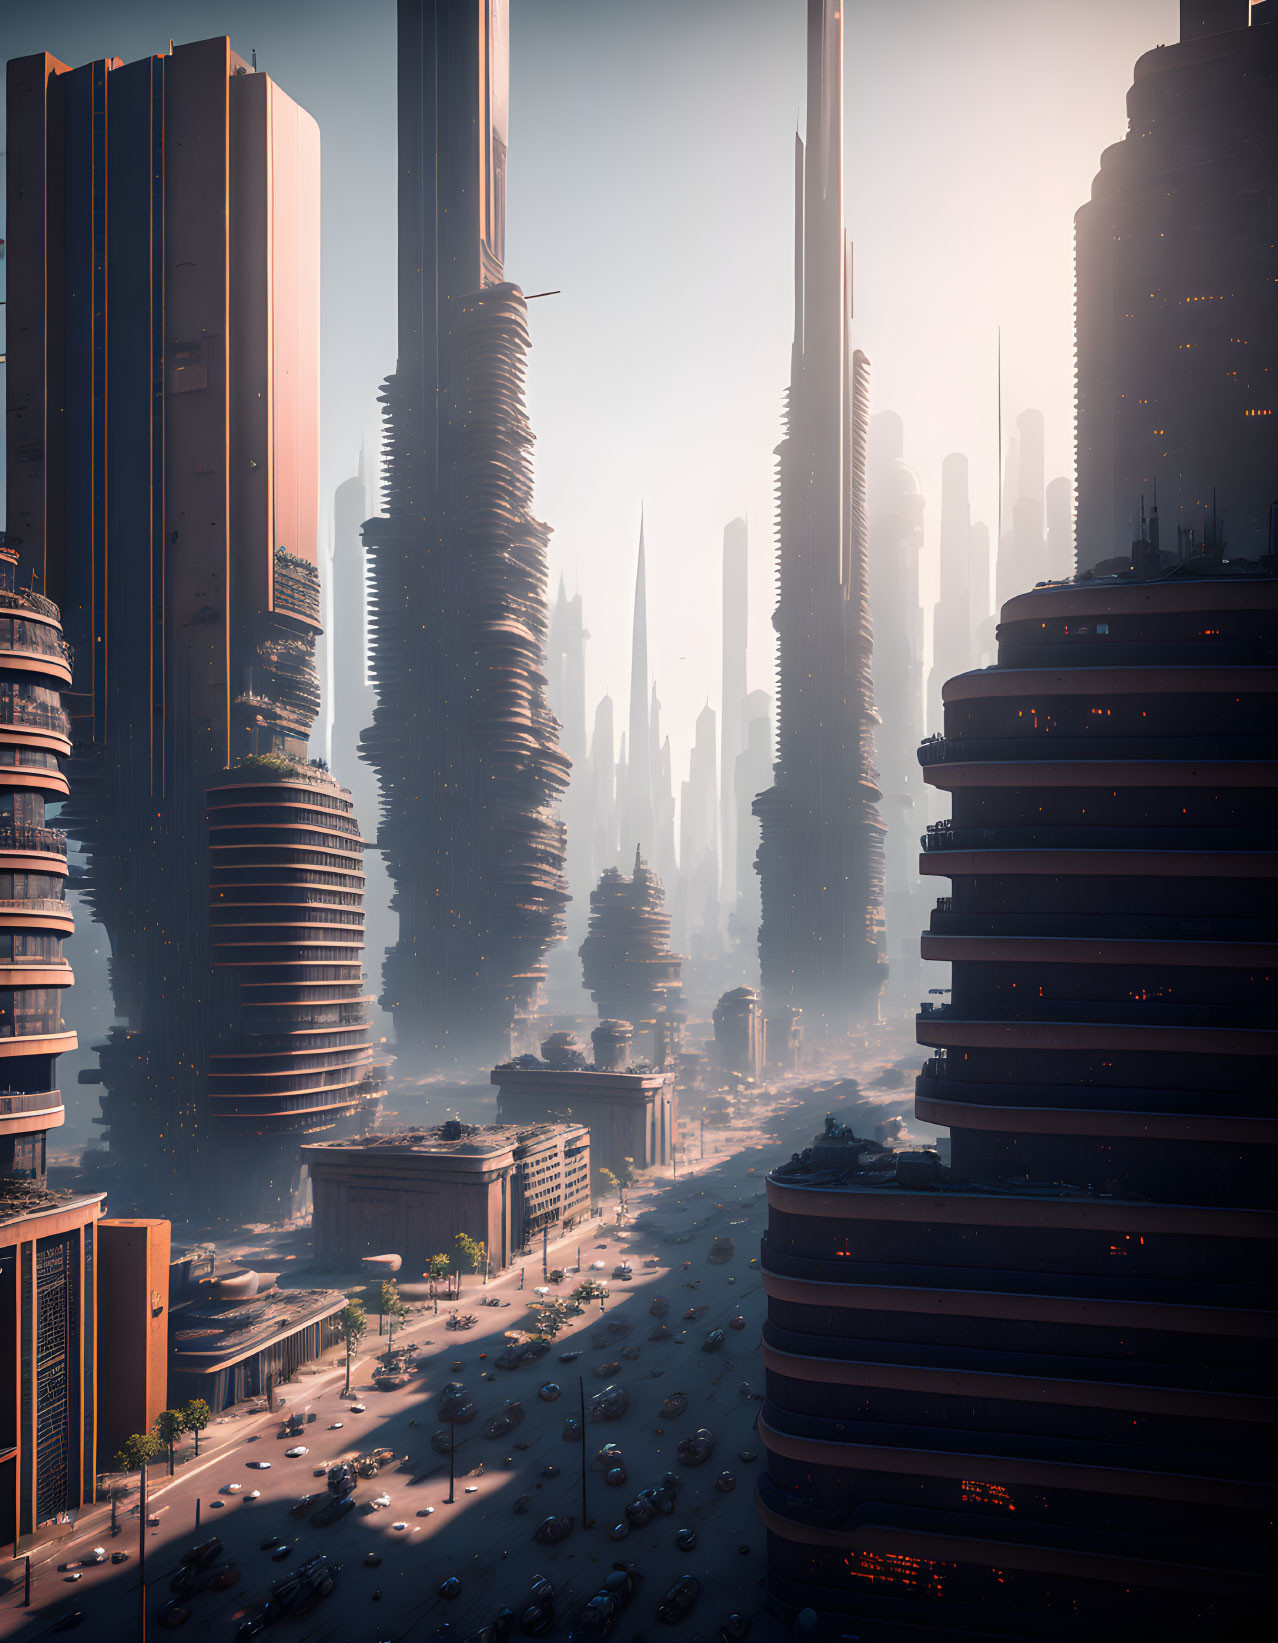 Dystopian megacity